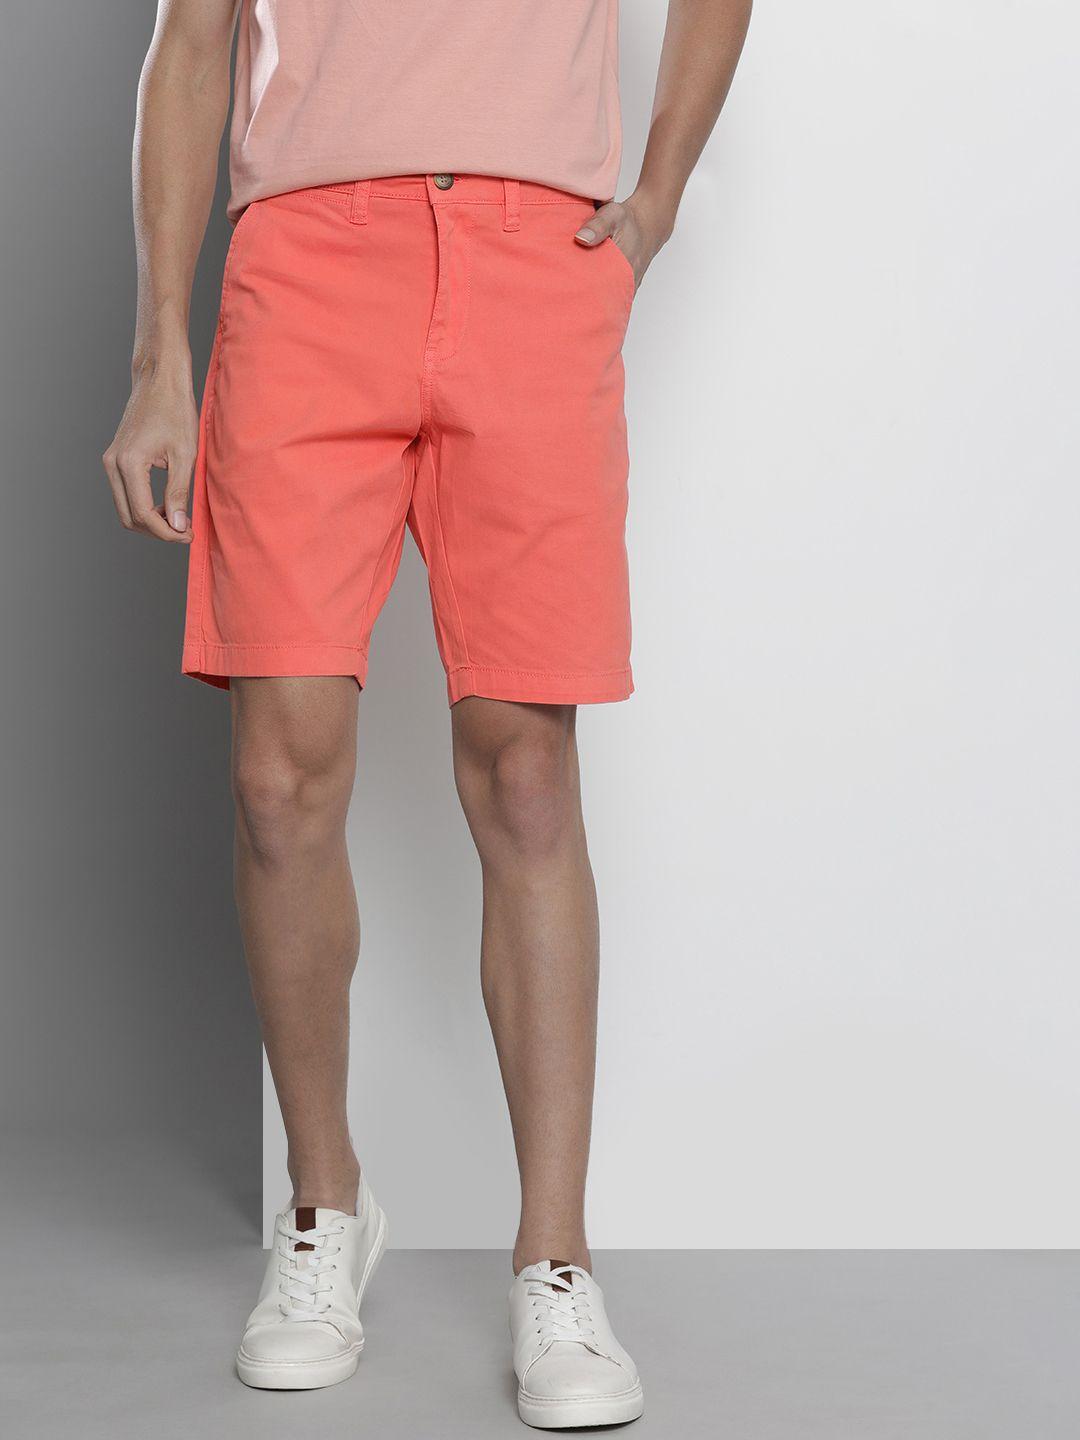 nautica-men-coral-pink-solid-slim-fit-denim-shorts